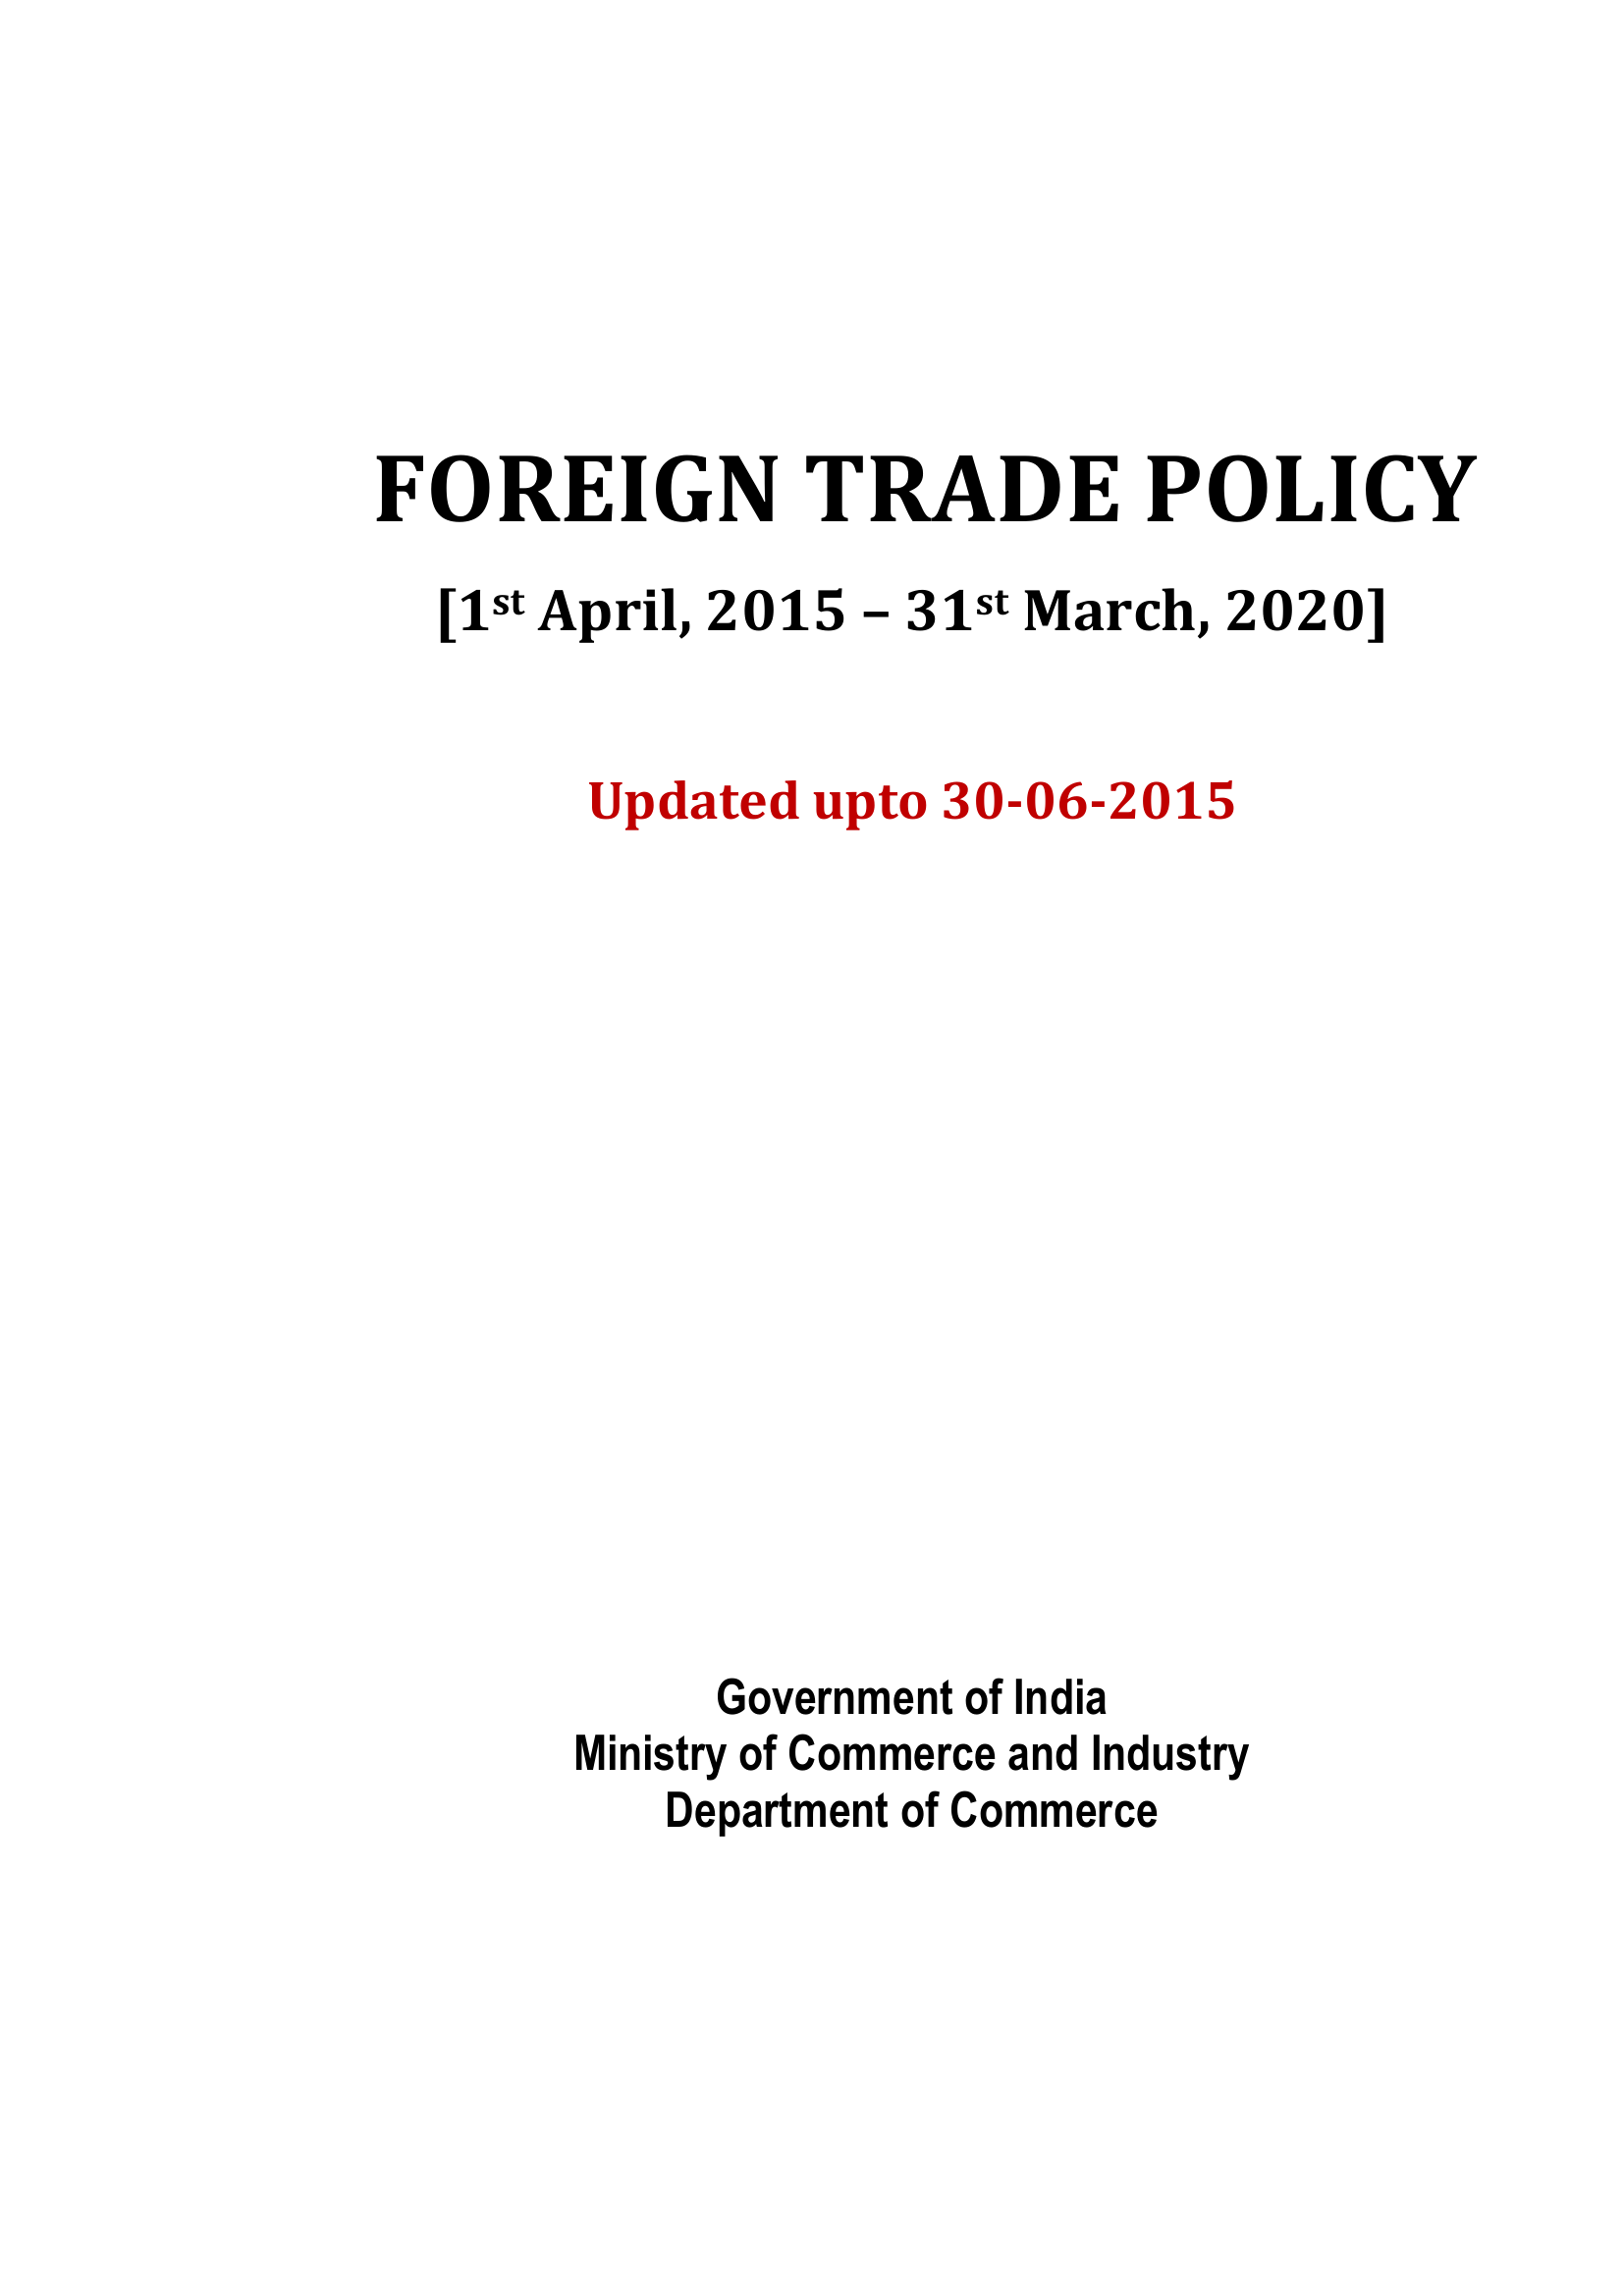 Foreign Trade Policy EXIM